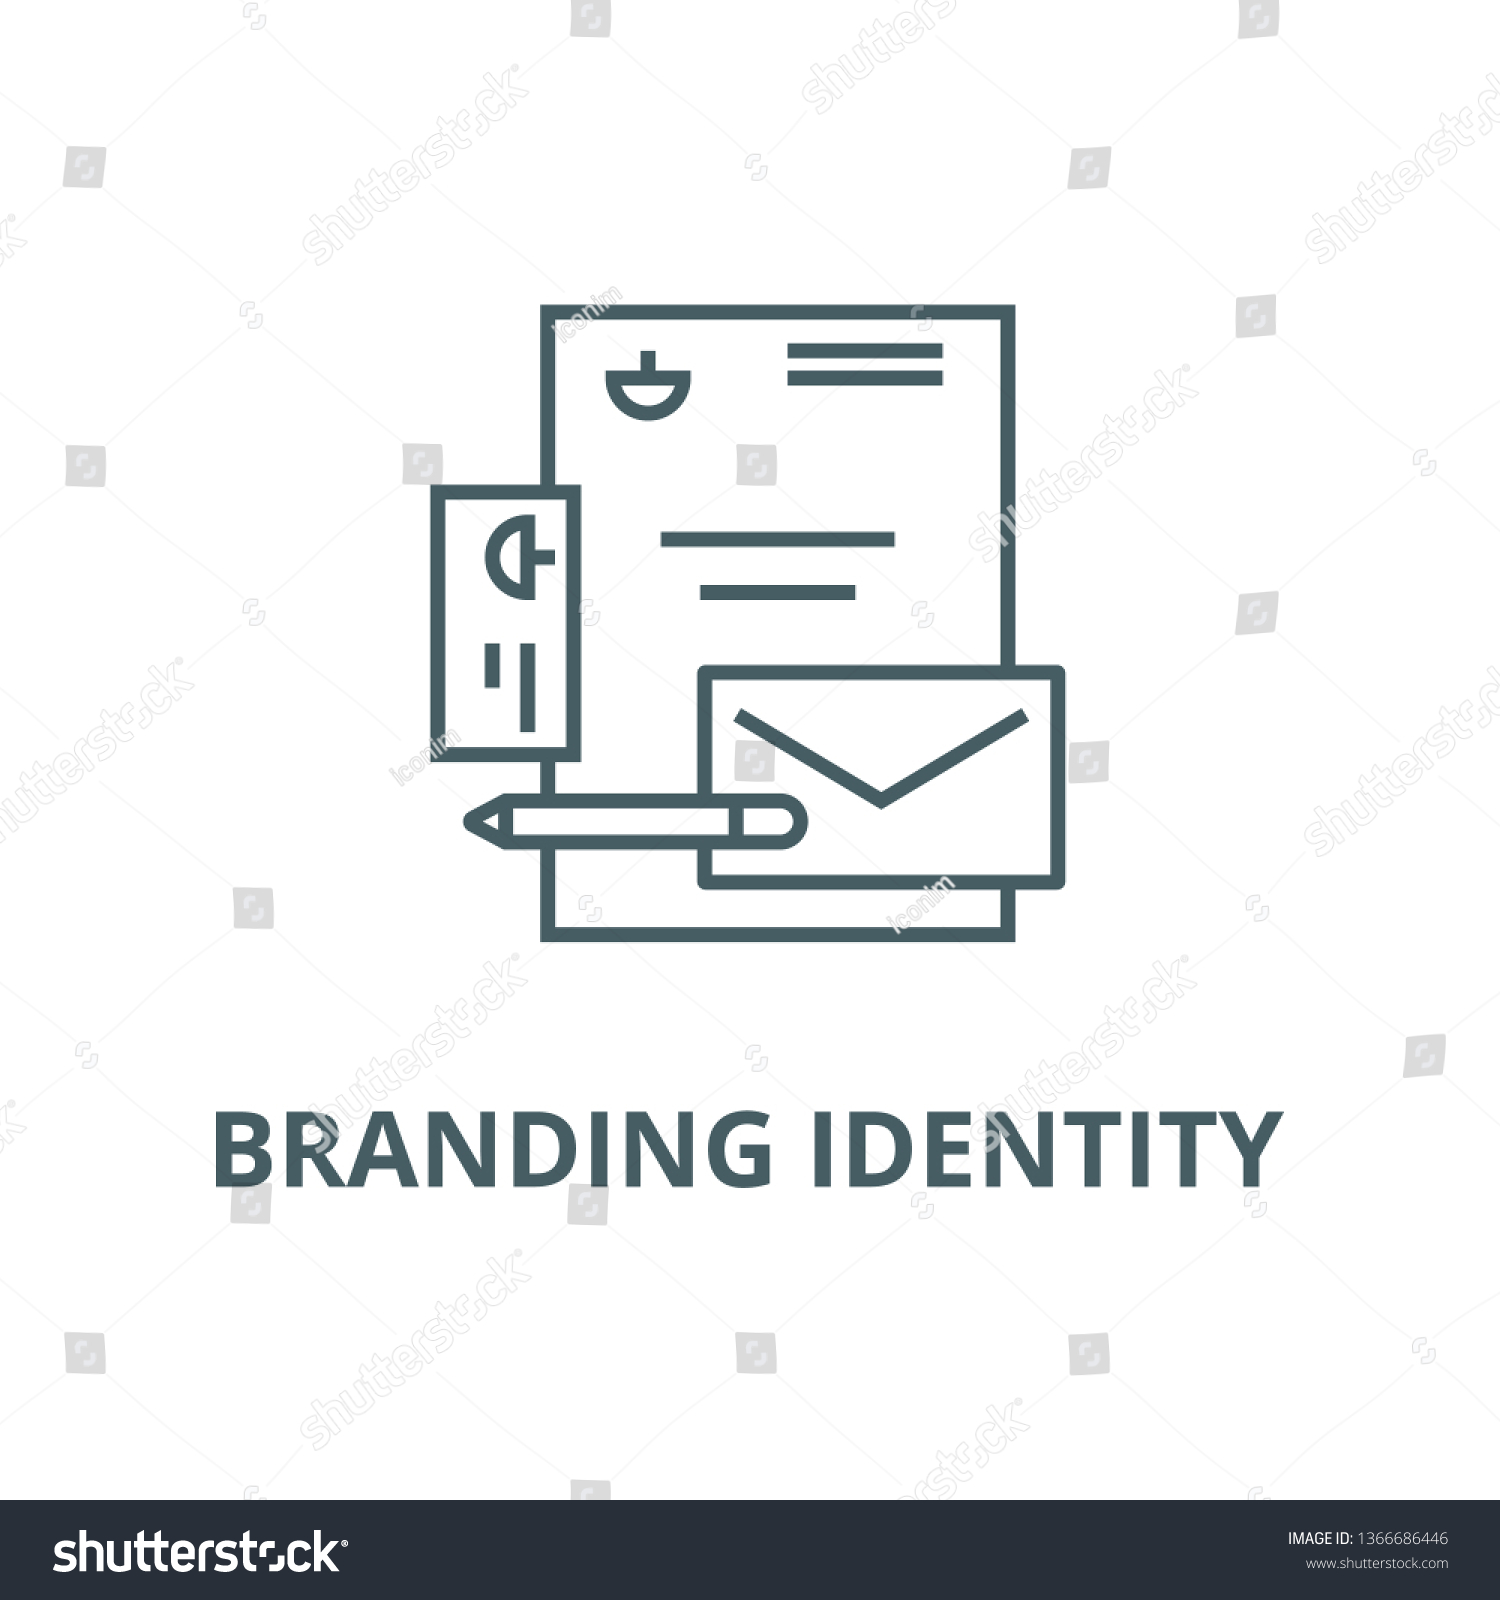 Branding identity line icon, vector. Branding identity outline sign, concept symbol, flat illustration #1366686446